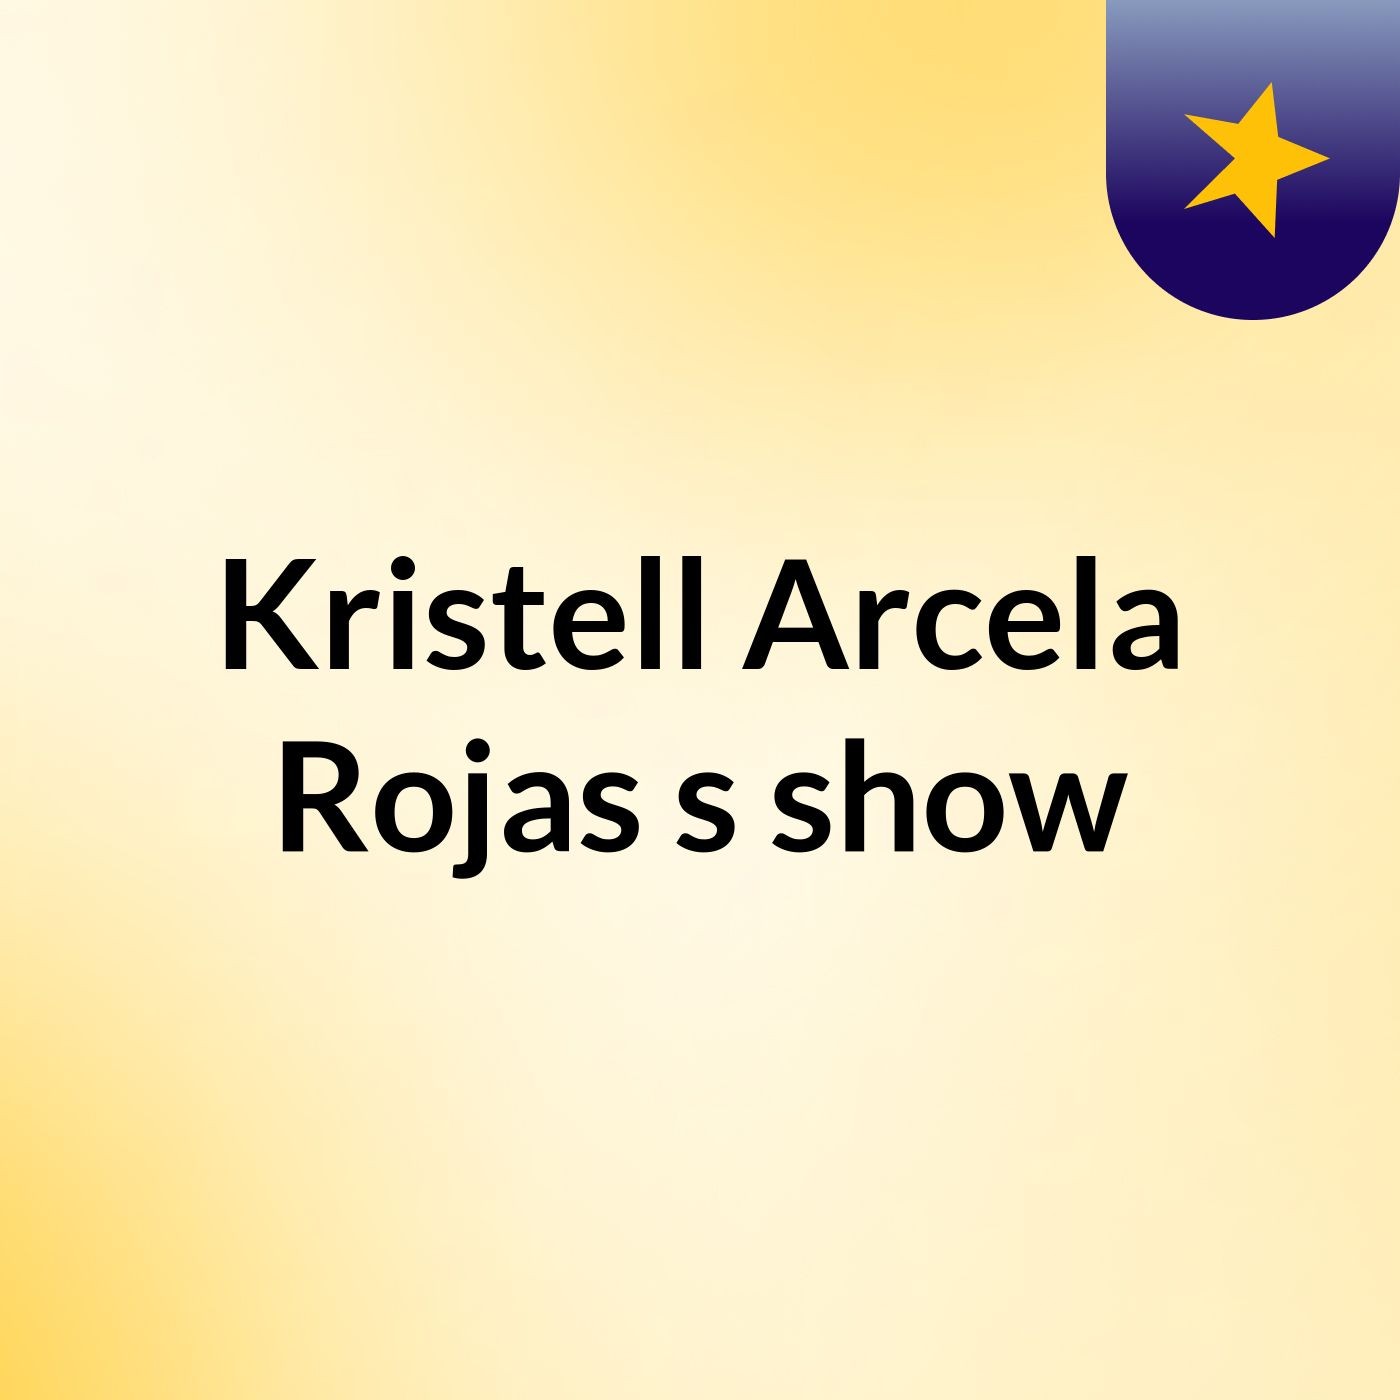 Kristell Arcela Rojas's show